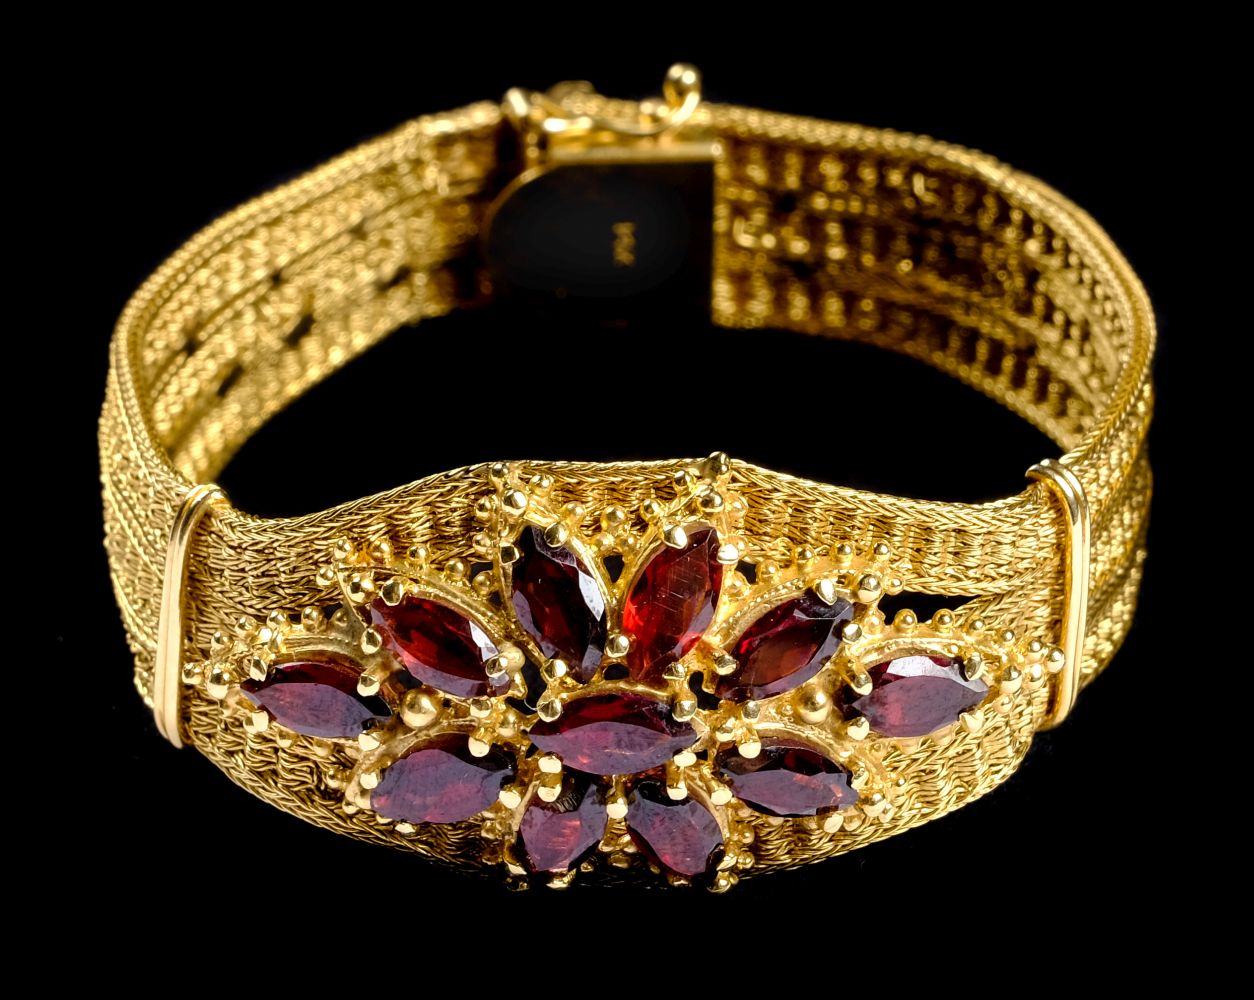 * Bracelet. A Continental 14K gold ladies bracelet